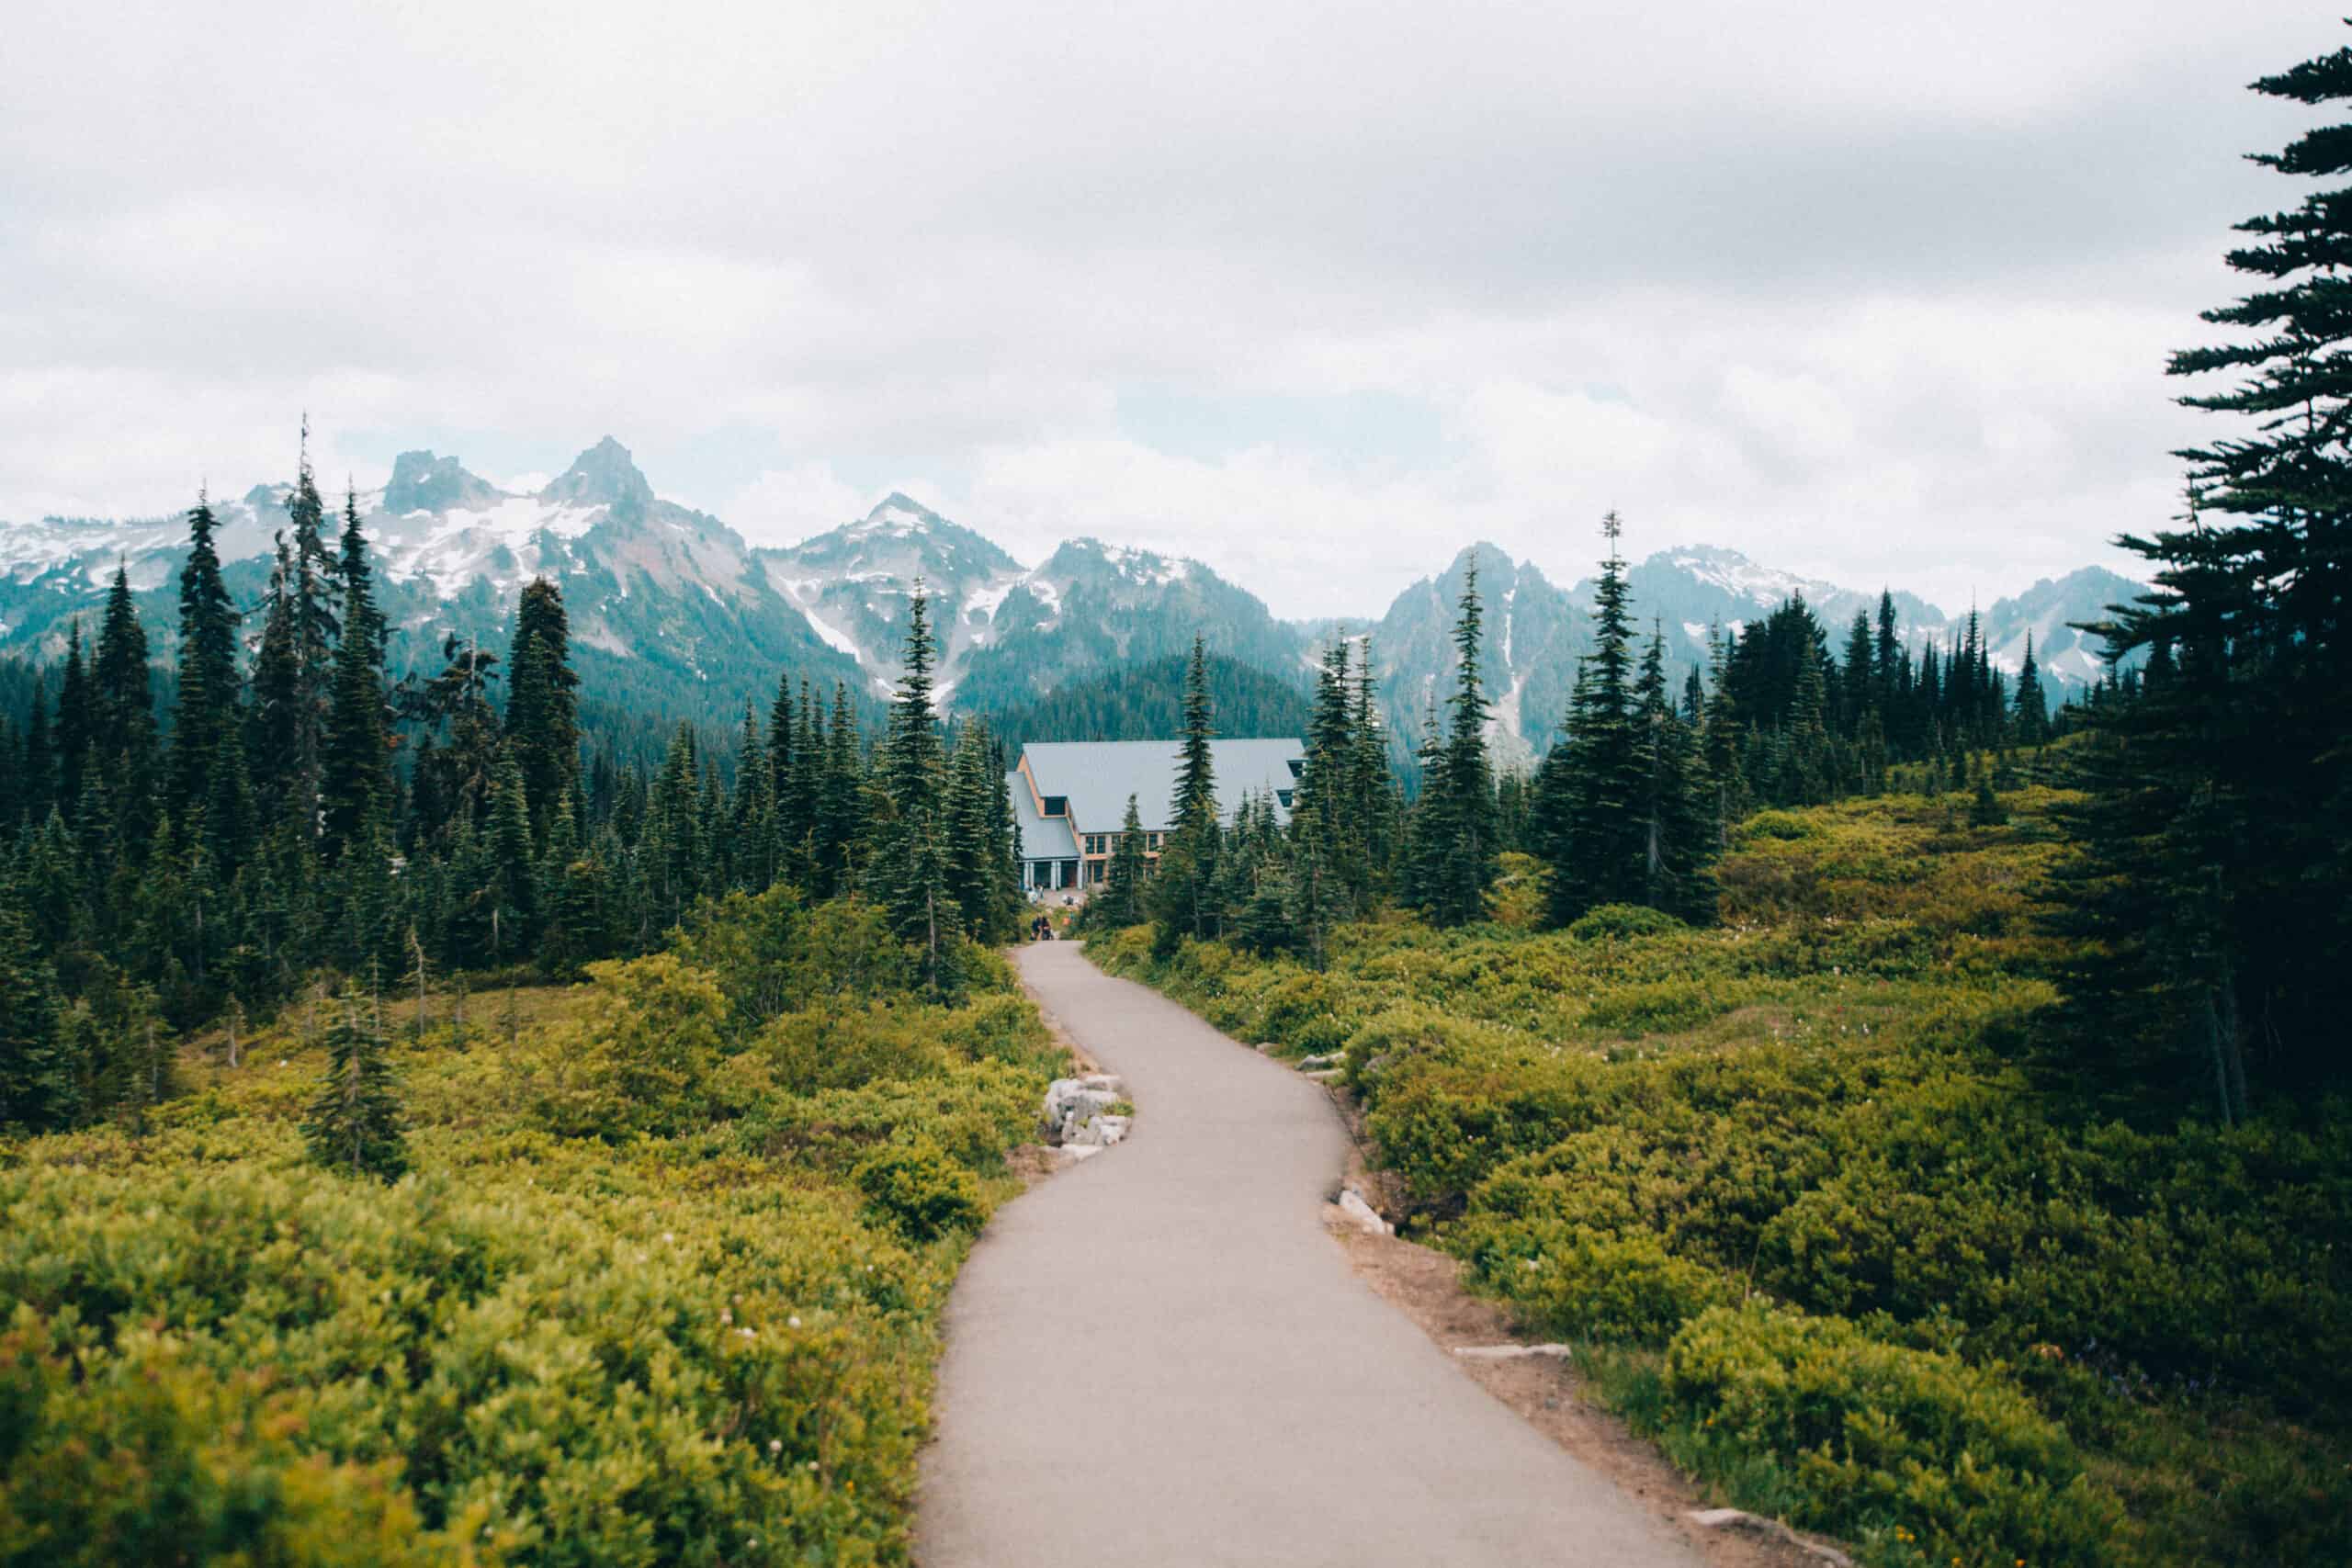 22 Fun Facts About Mount Rainier National Park